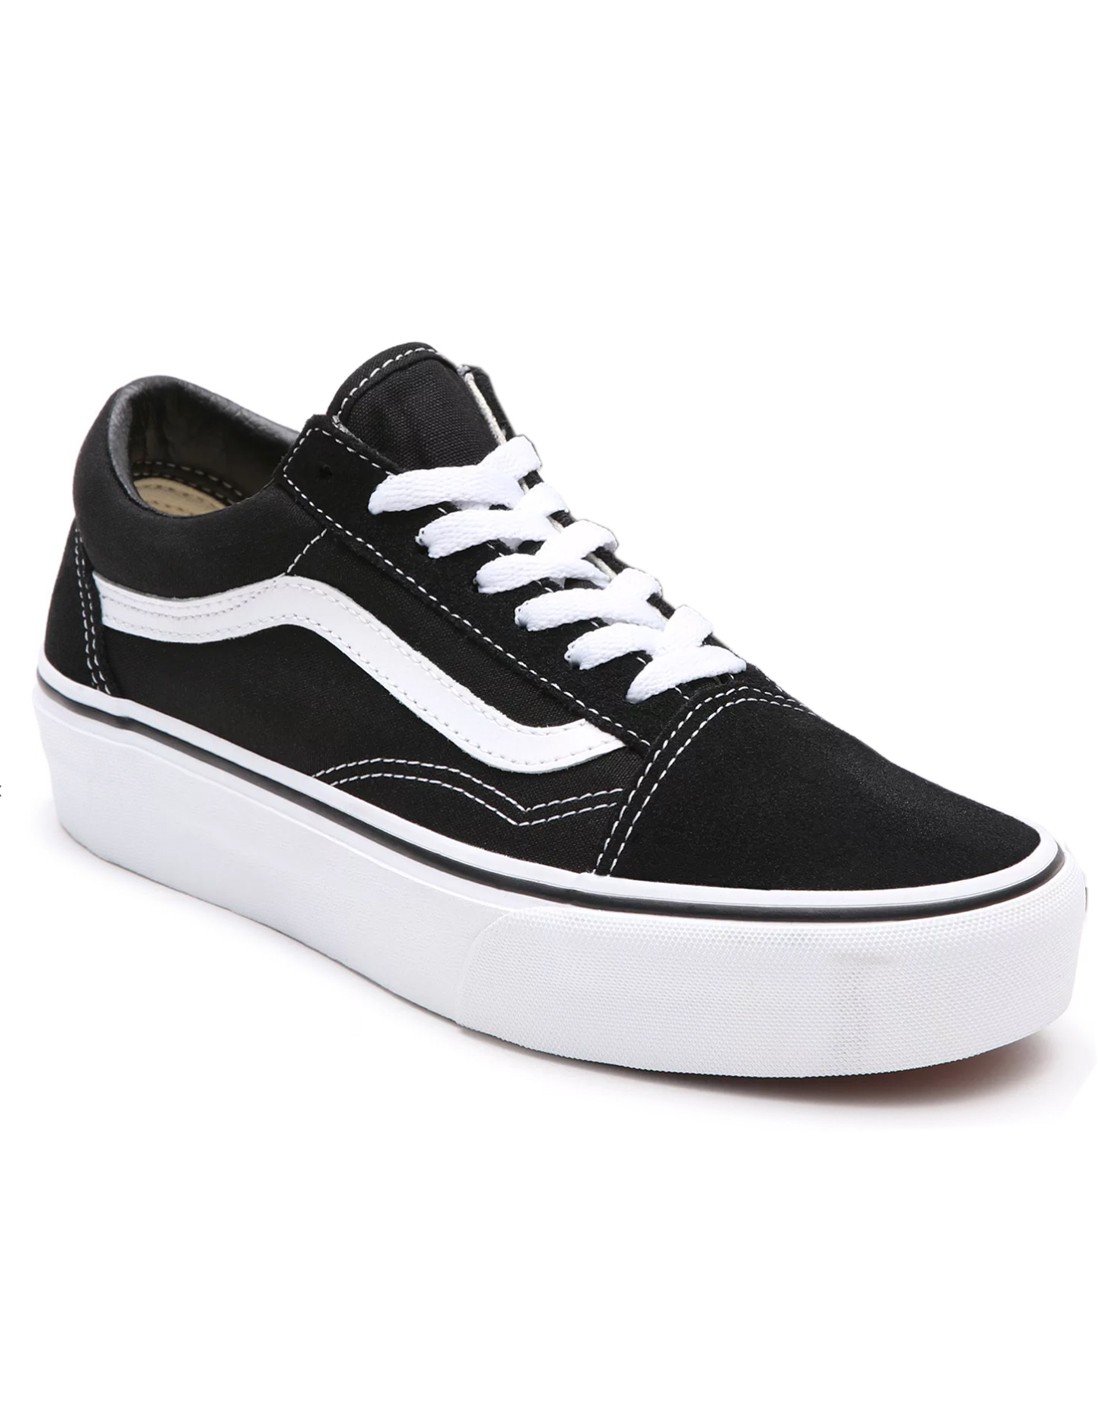 Old Skool - Black/White - Skate shoes